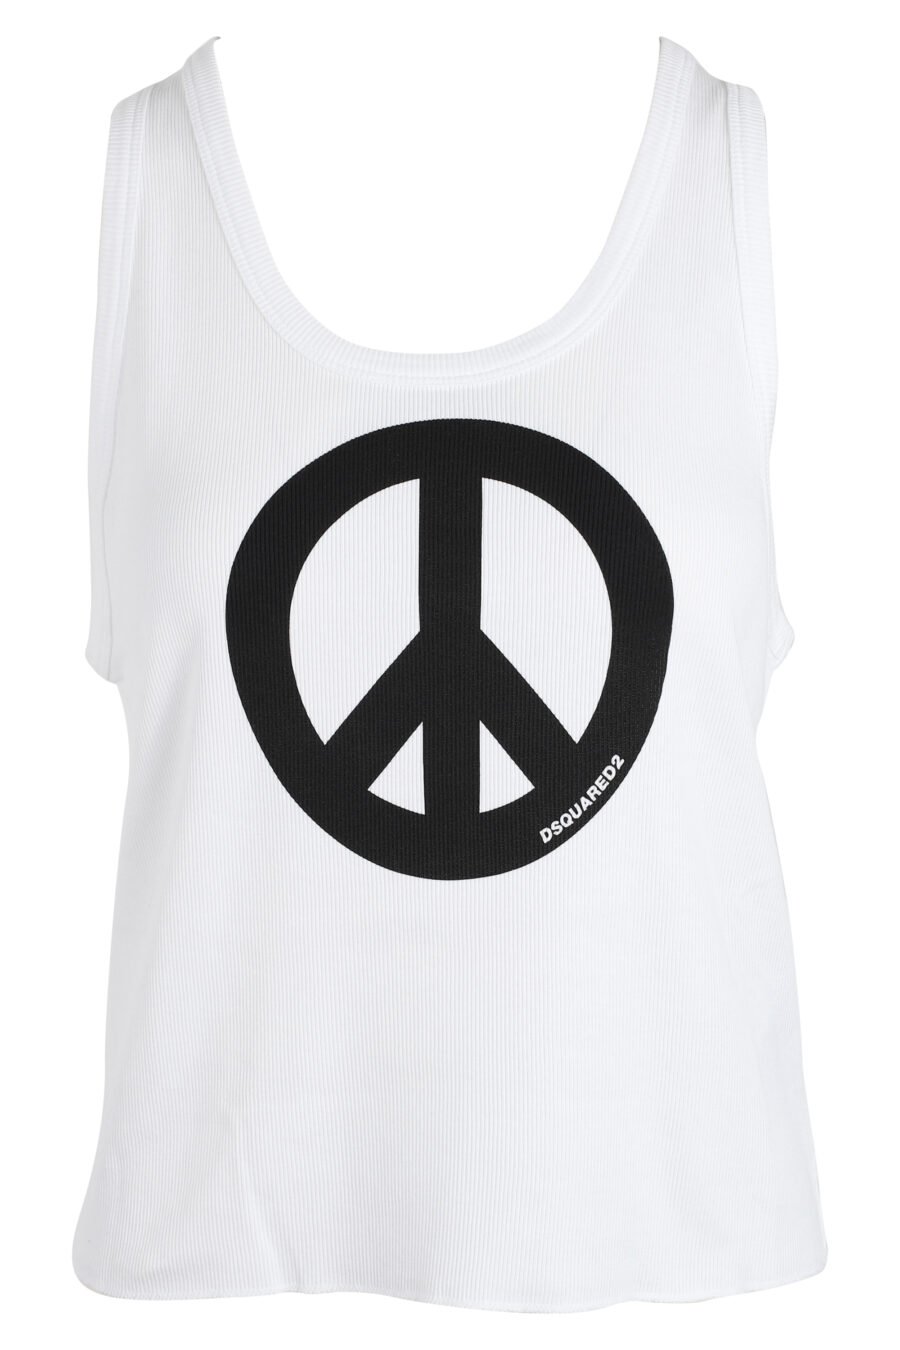 Camiseta sin mangas blanca con logo paz - IMG 4859